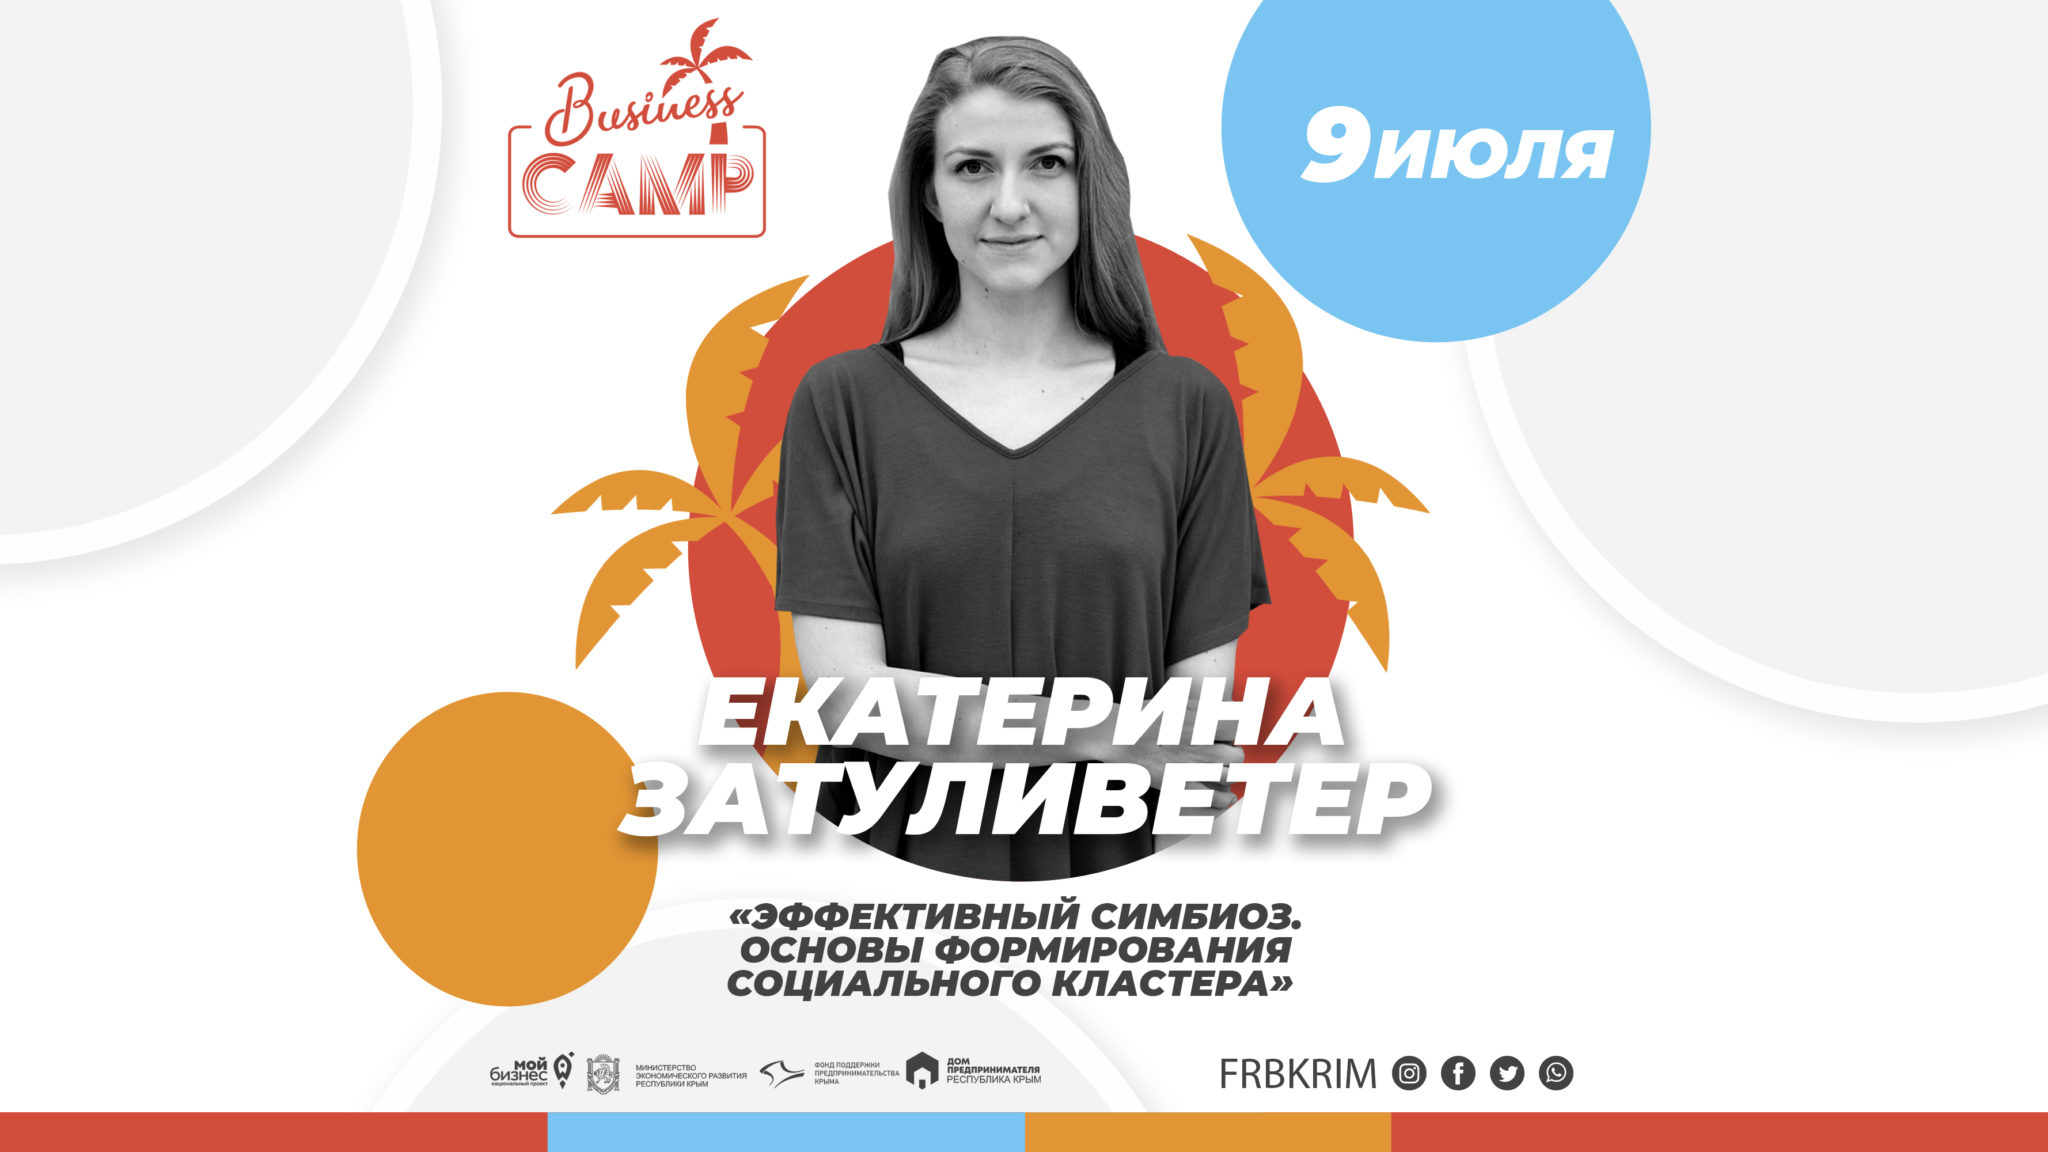 БИЗНЕС CAMP-2020 Екатерина Затуливетер